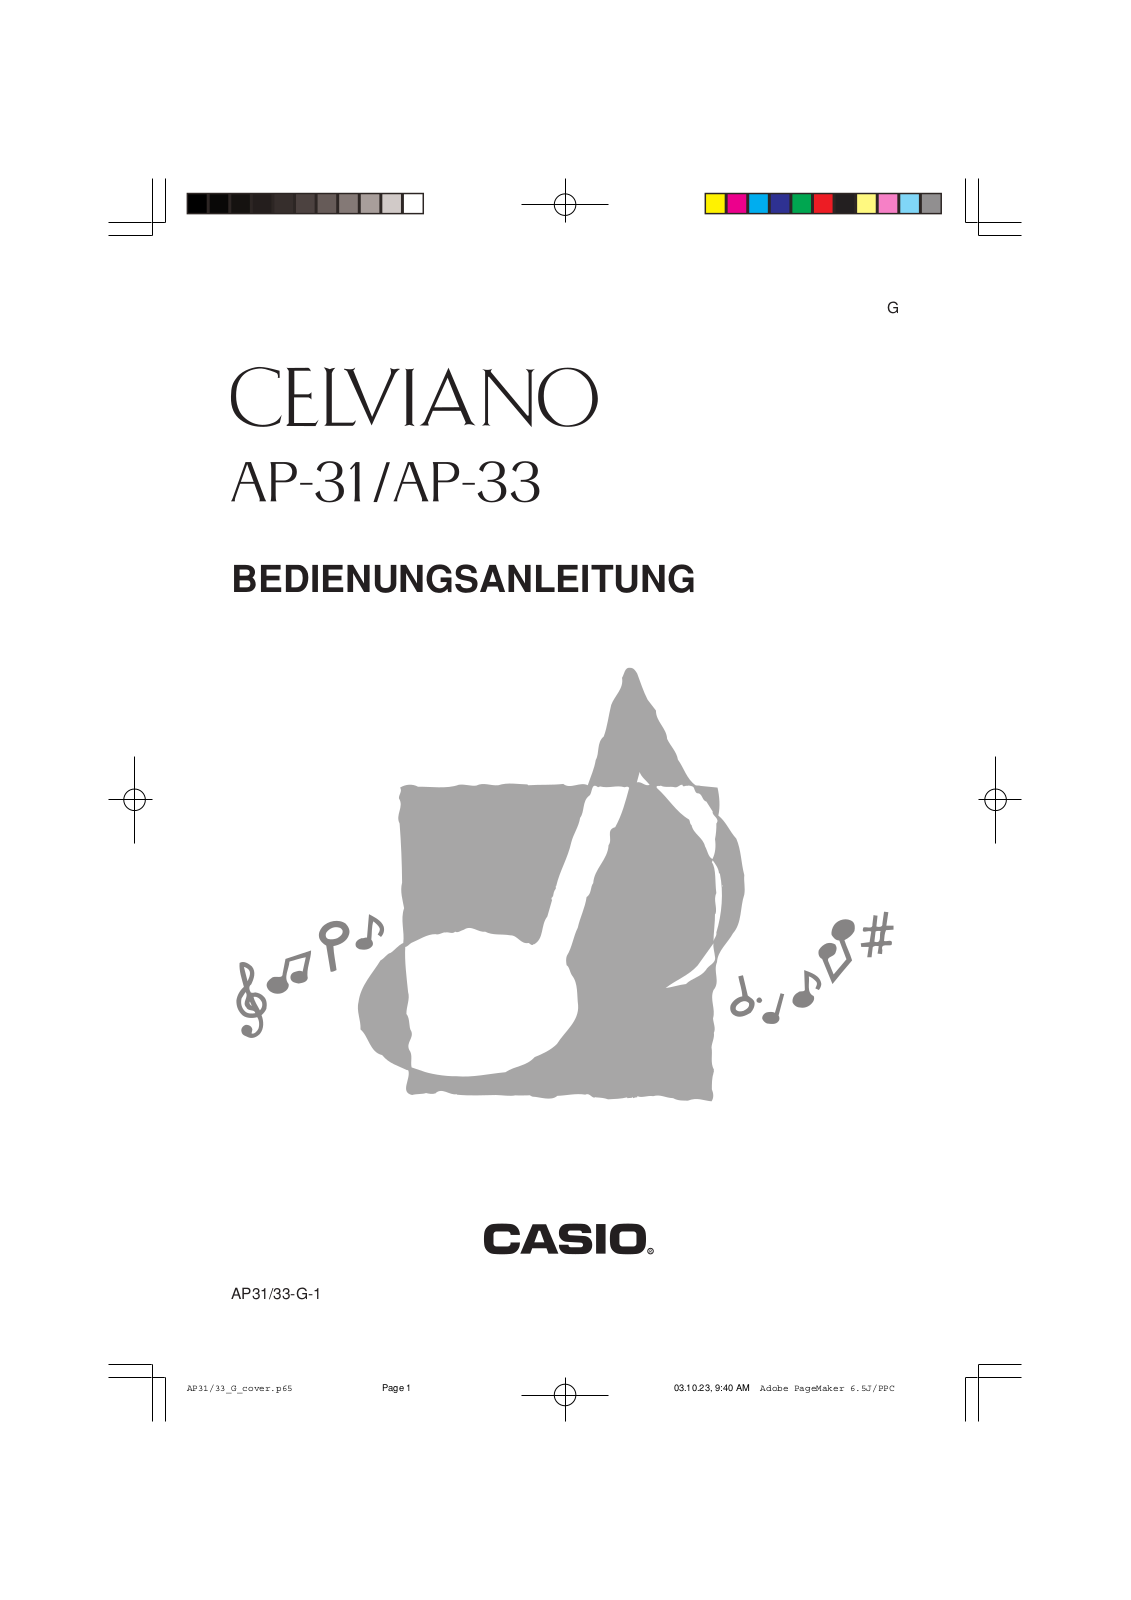 Casio CELVIANO AP-31, CELVIANO AP-33 User Manual